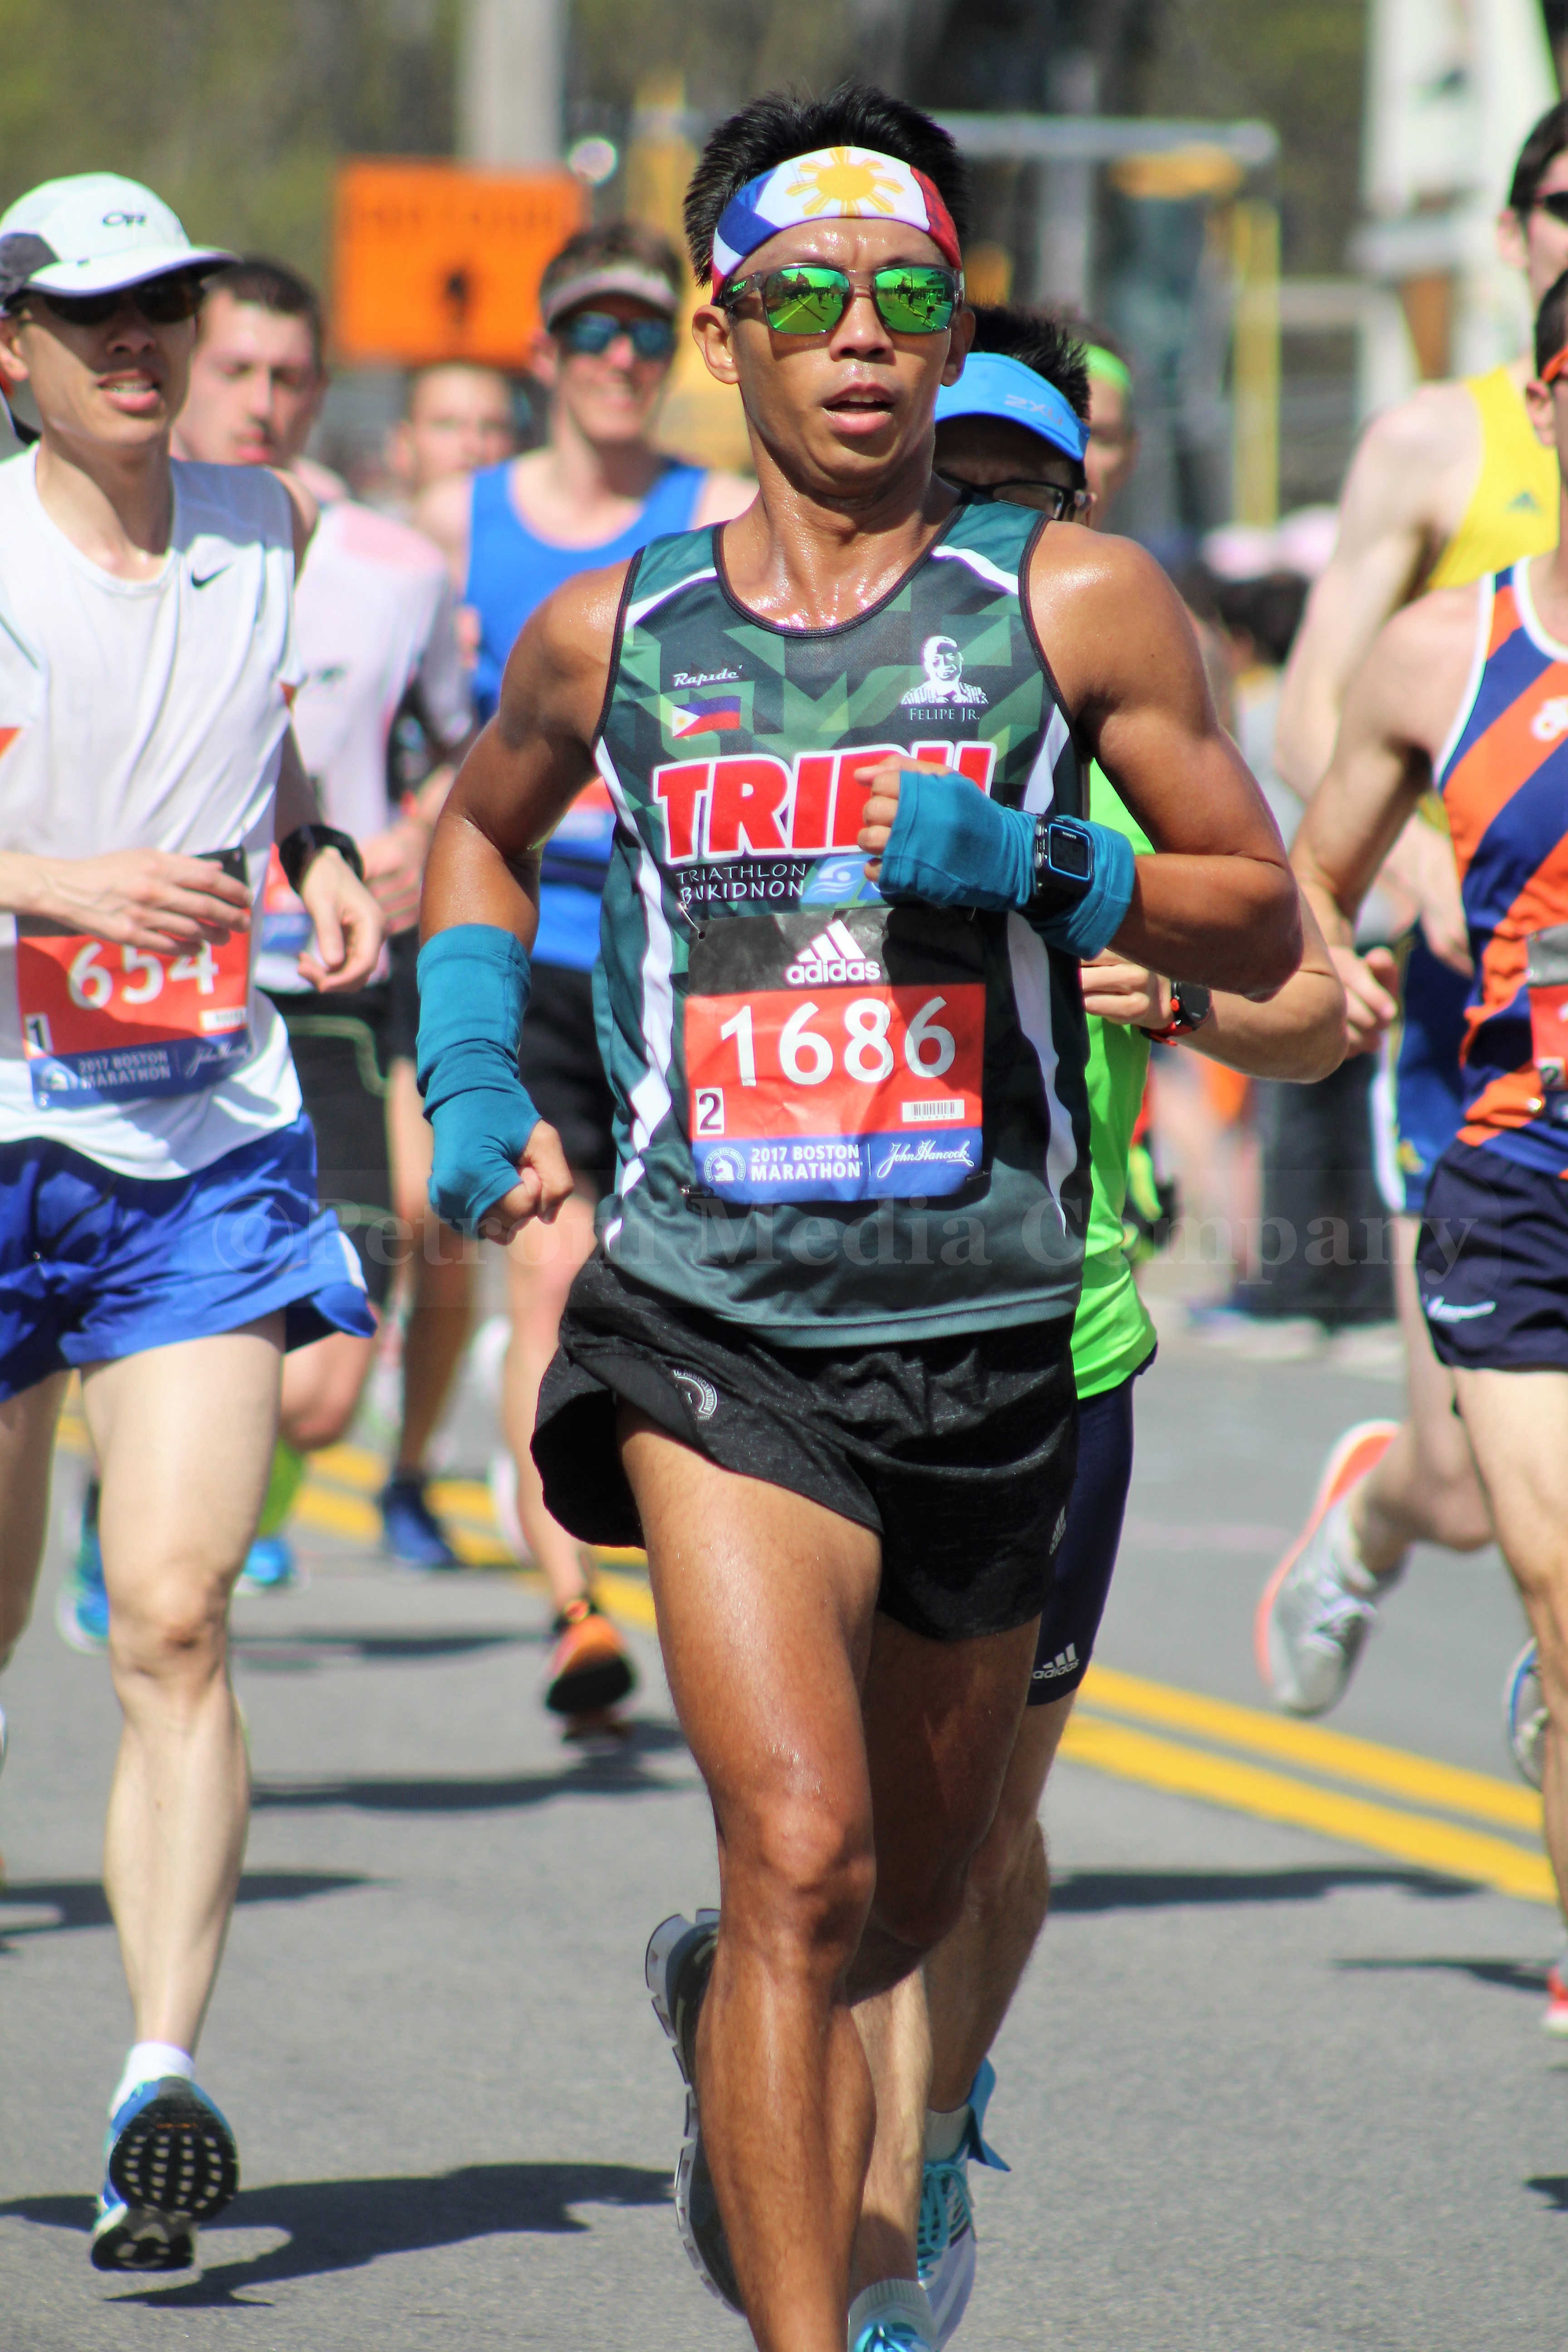 SLIDESHOW Framingham Runners Who Completed the 2017 Boston Marathon